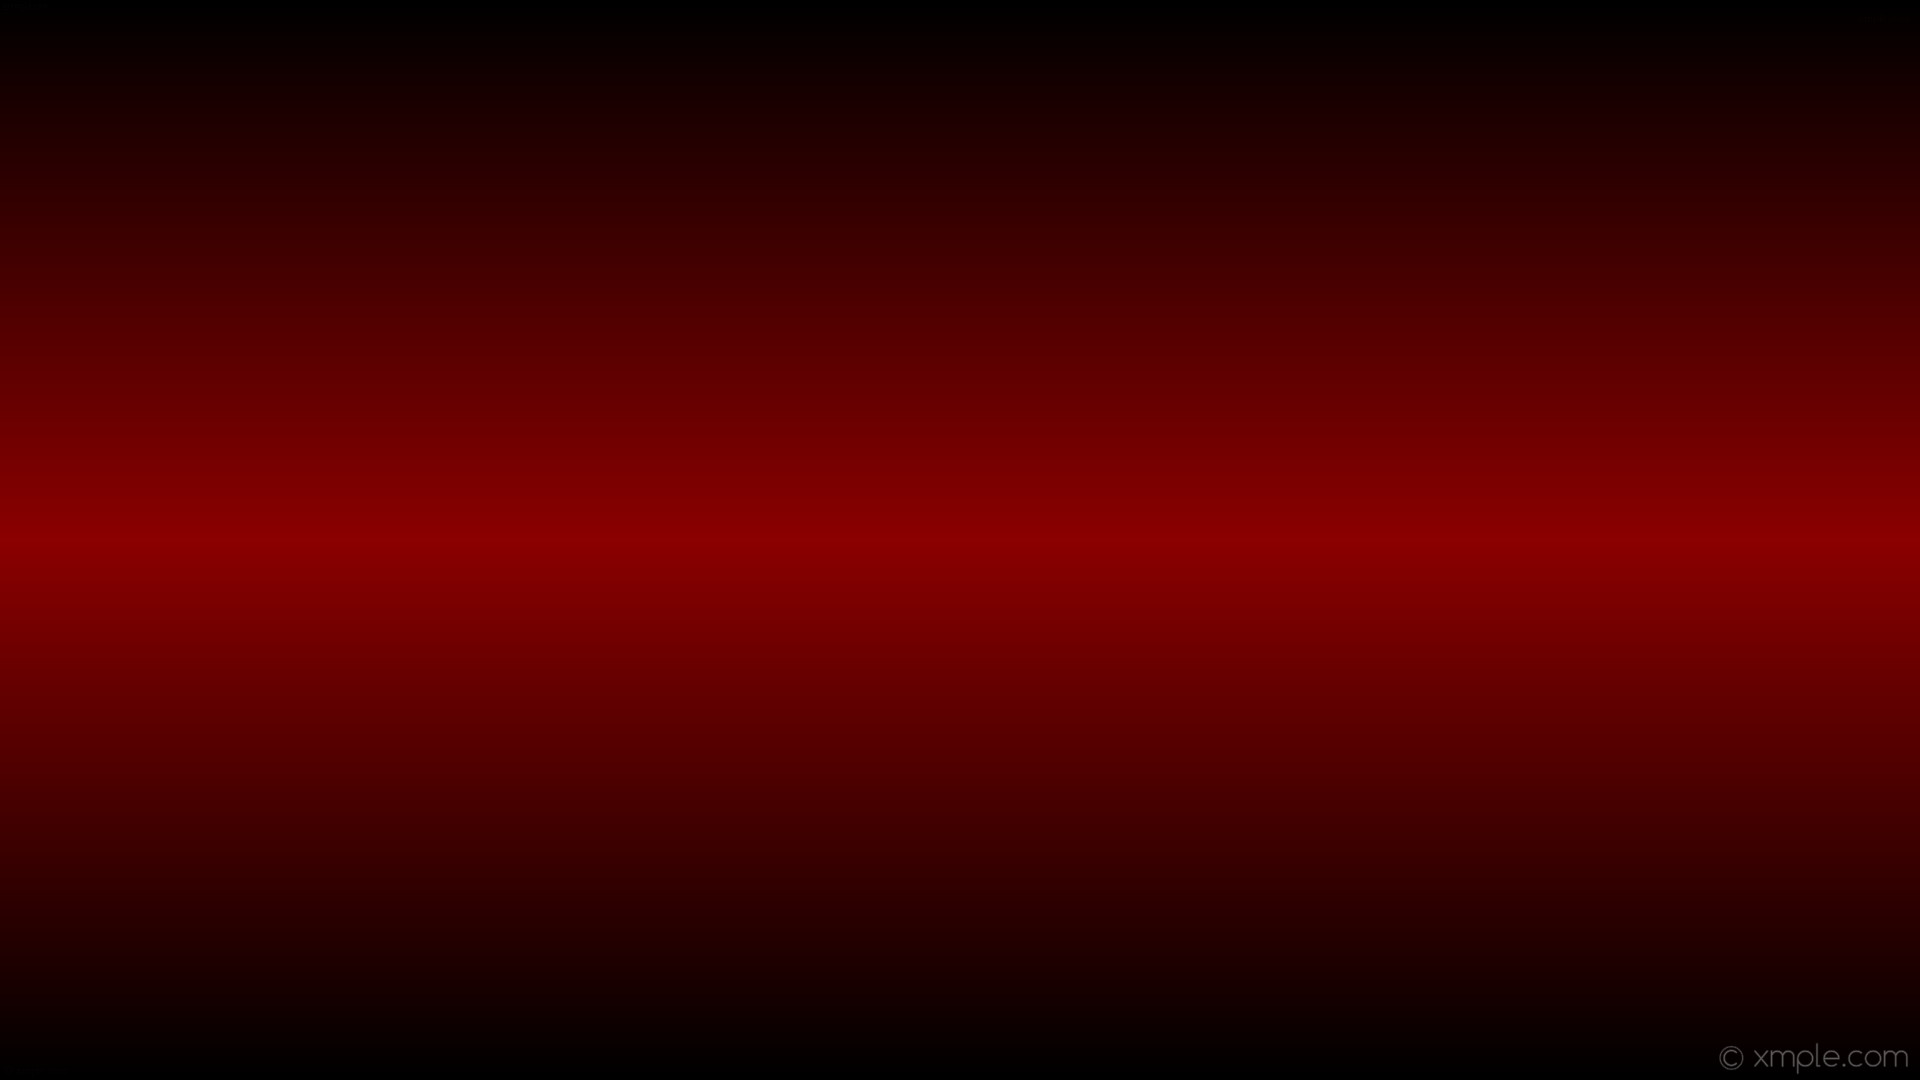 1920x1080 wallpaper linear highlight red gradient black dark red #000000 #8b0000 270Â°  50%